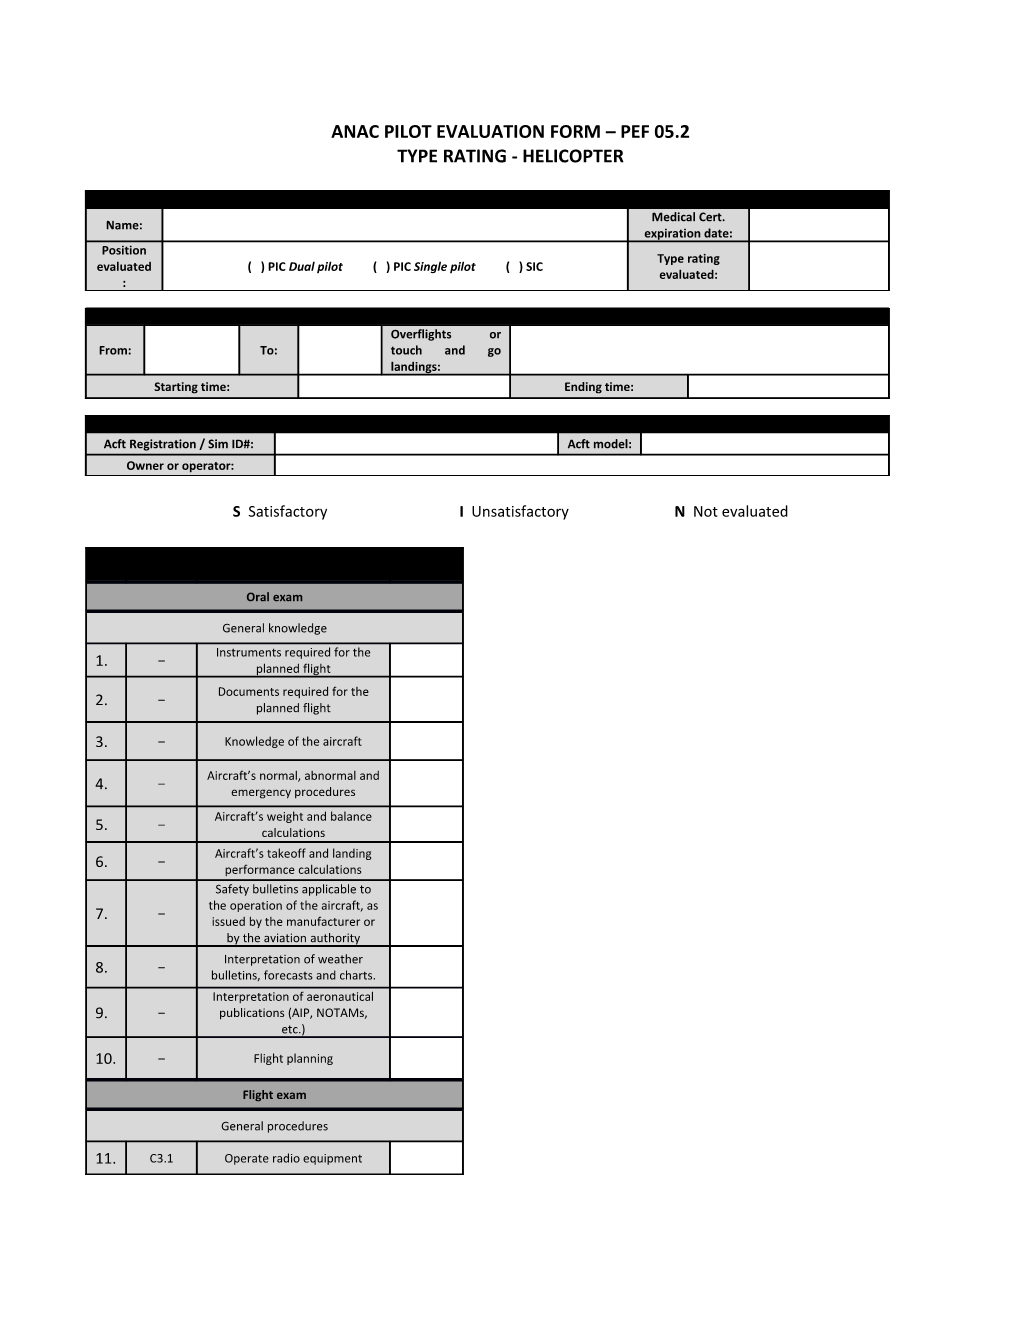 Anac Pilot Evaluation Form Pef 05.2